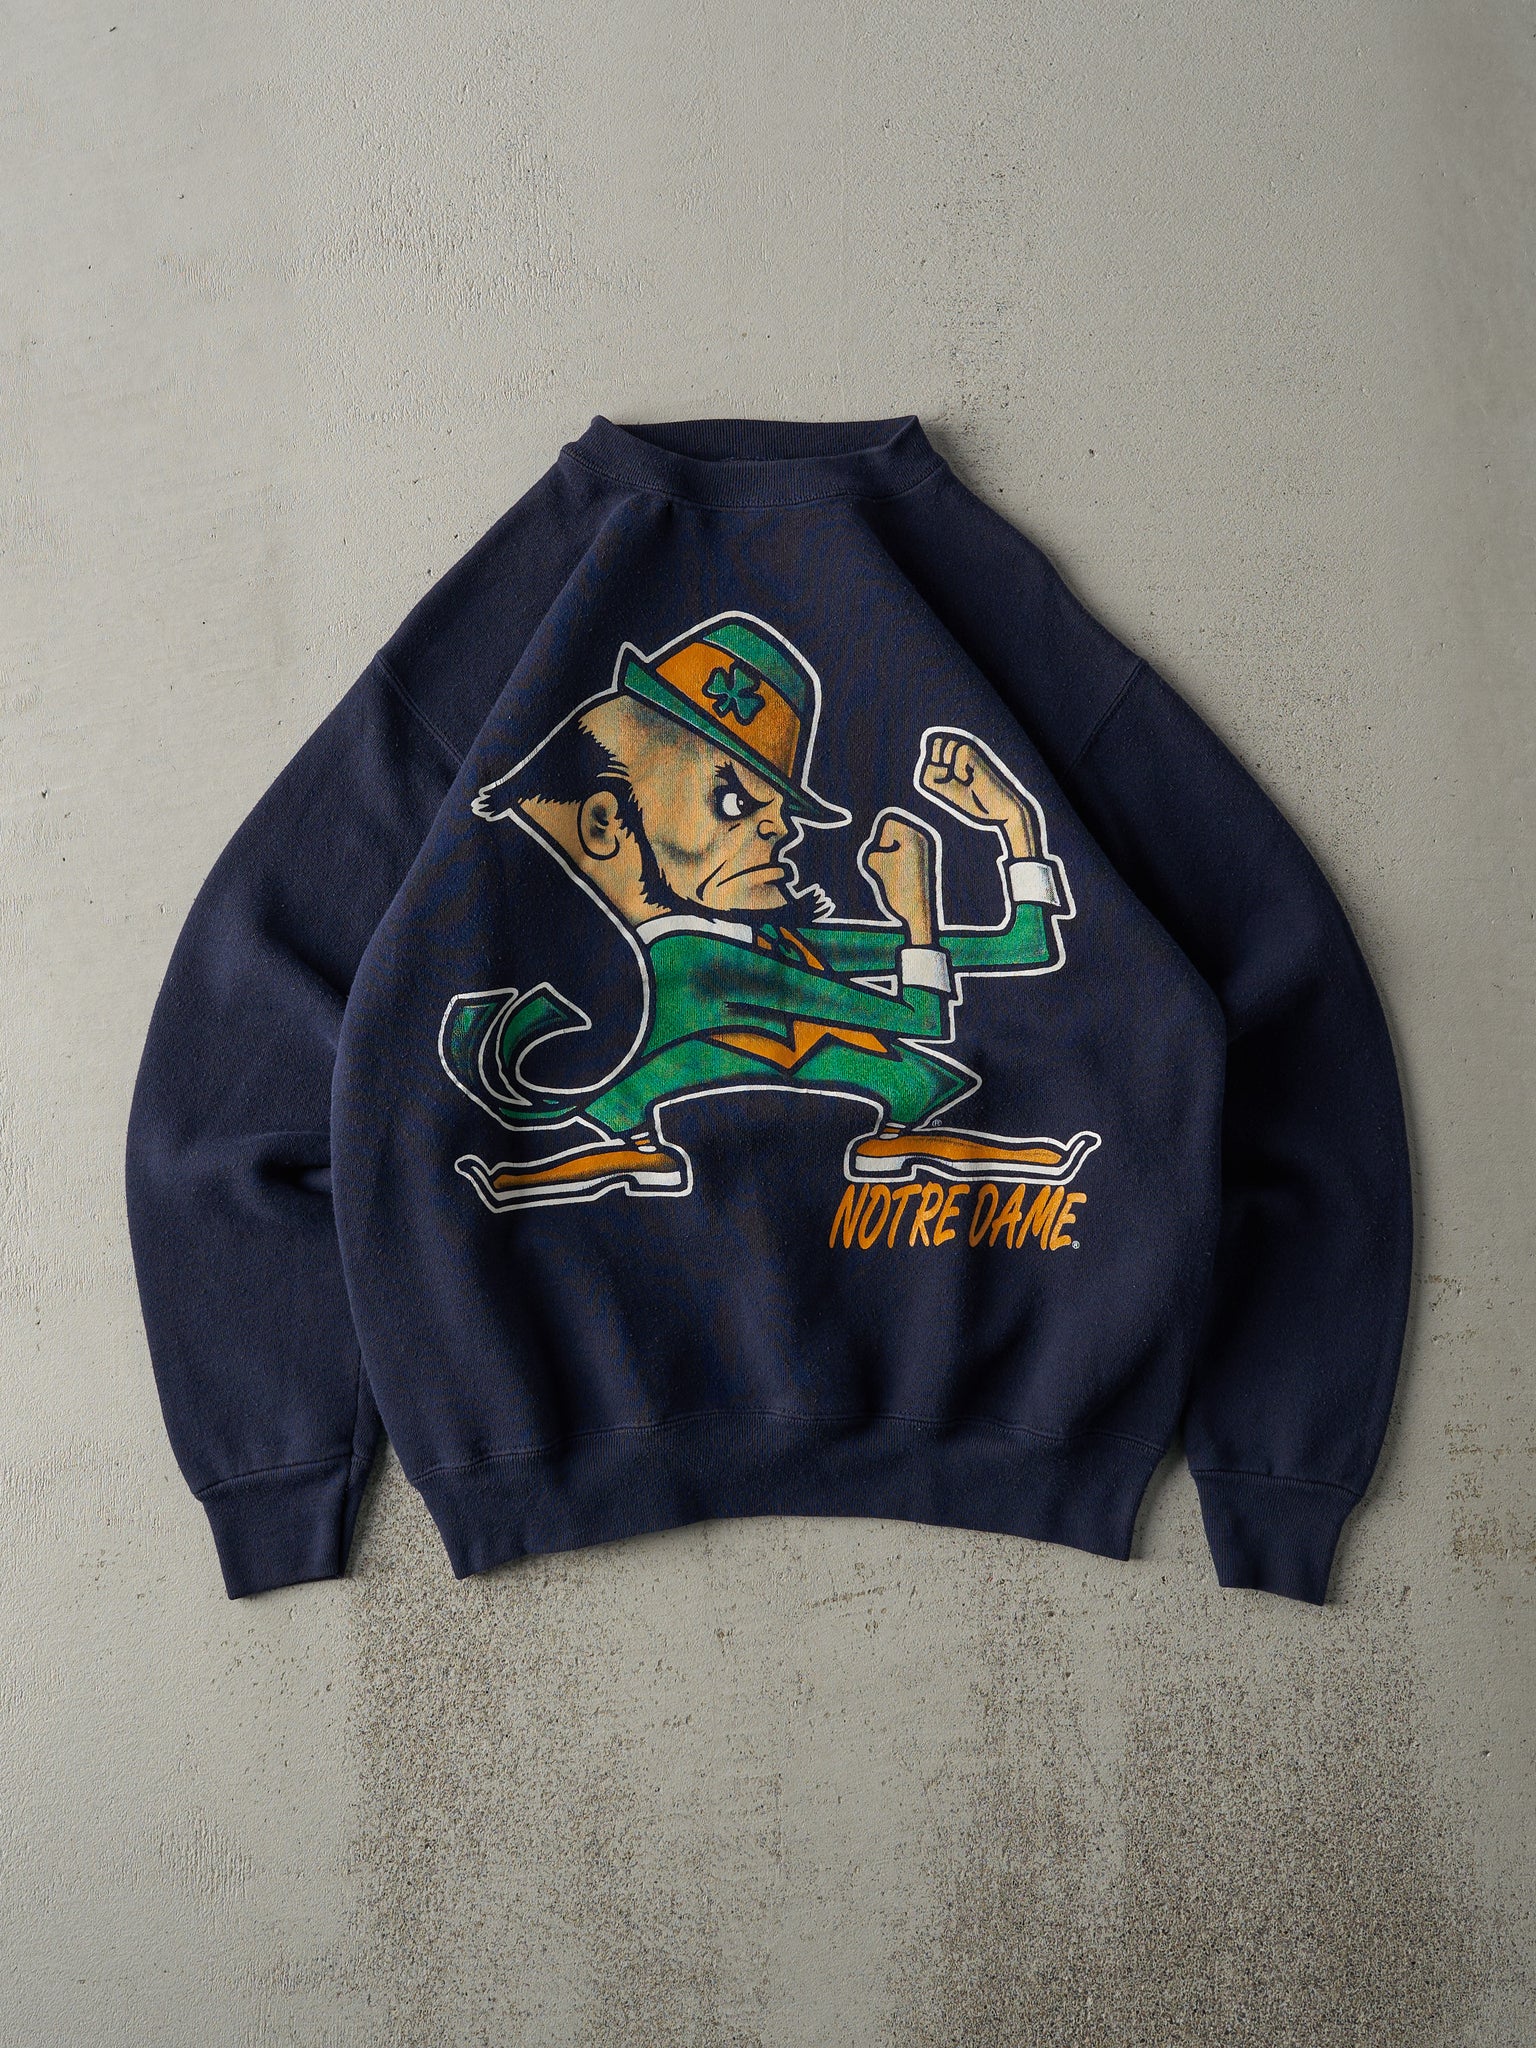 Vintage 90s Navy Blue Notre Dame Fighting Irish Crewneck (S)